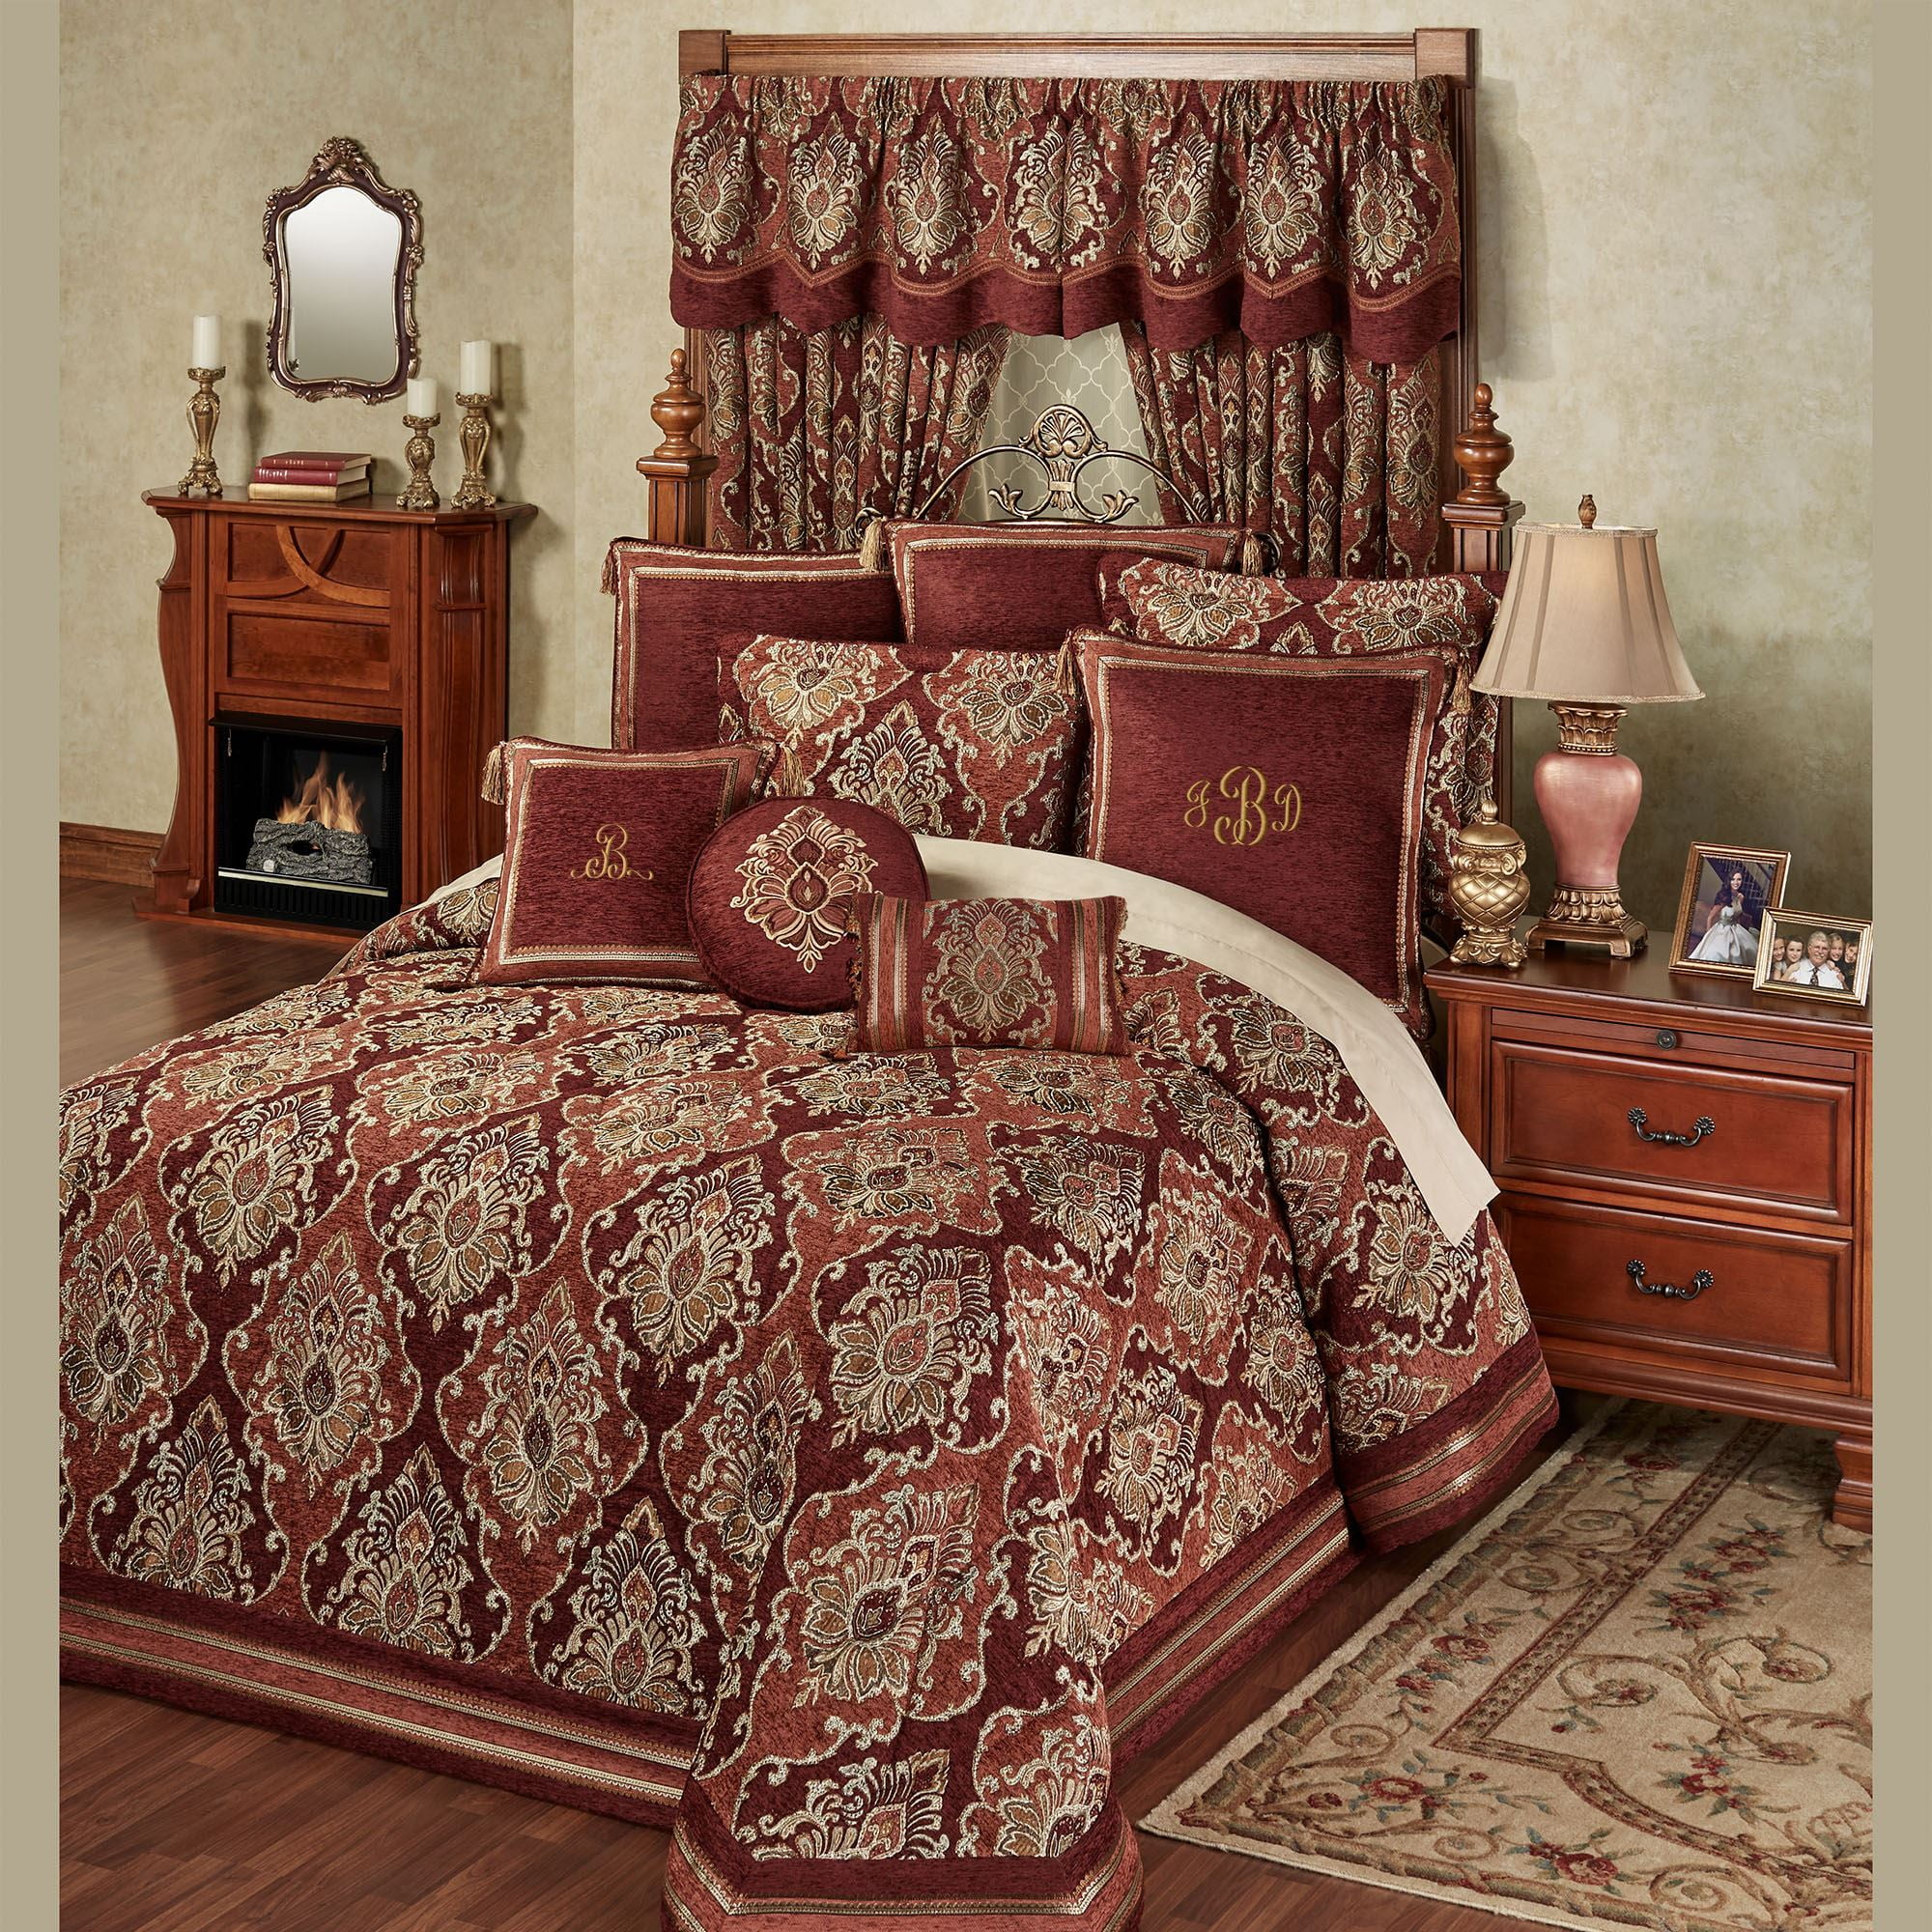 Burgundy - Bedding - Ravenna - Aesthetic Victorian Grande Chenille Decor Bedspread Bedspread Color Jacquard - Grande Style Quilted for Queen Royal Elegant